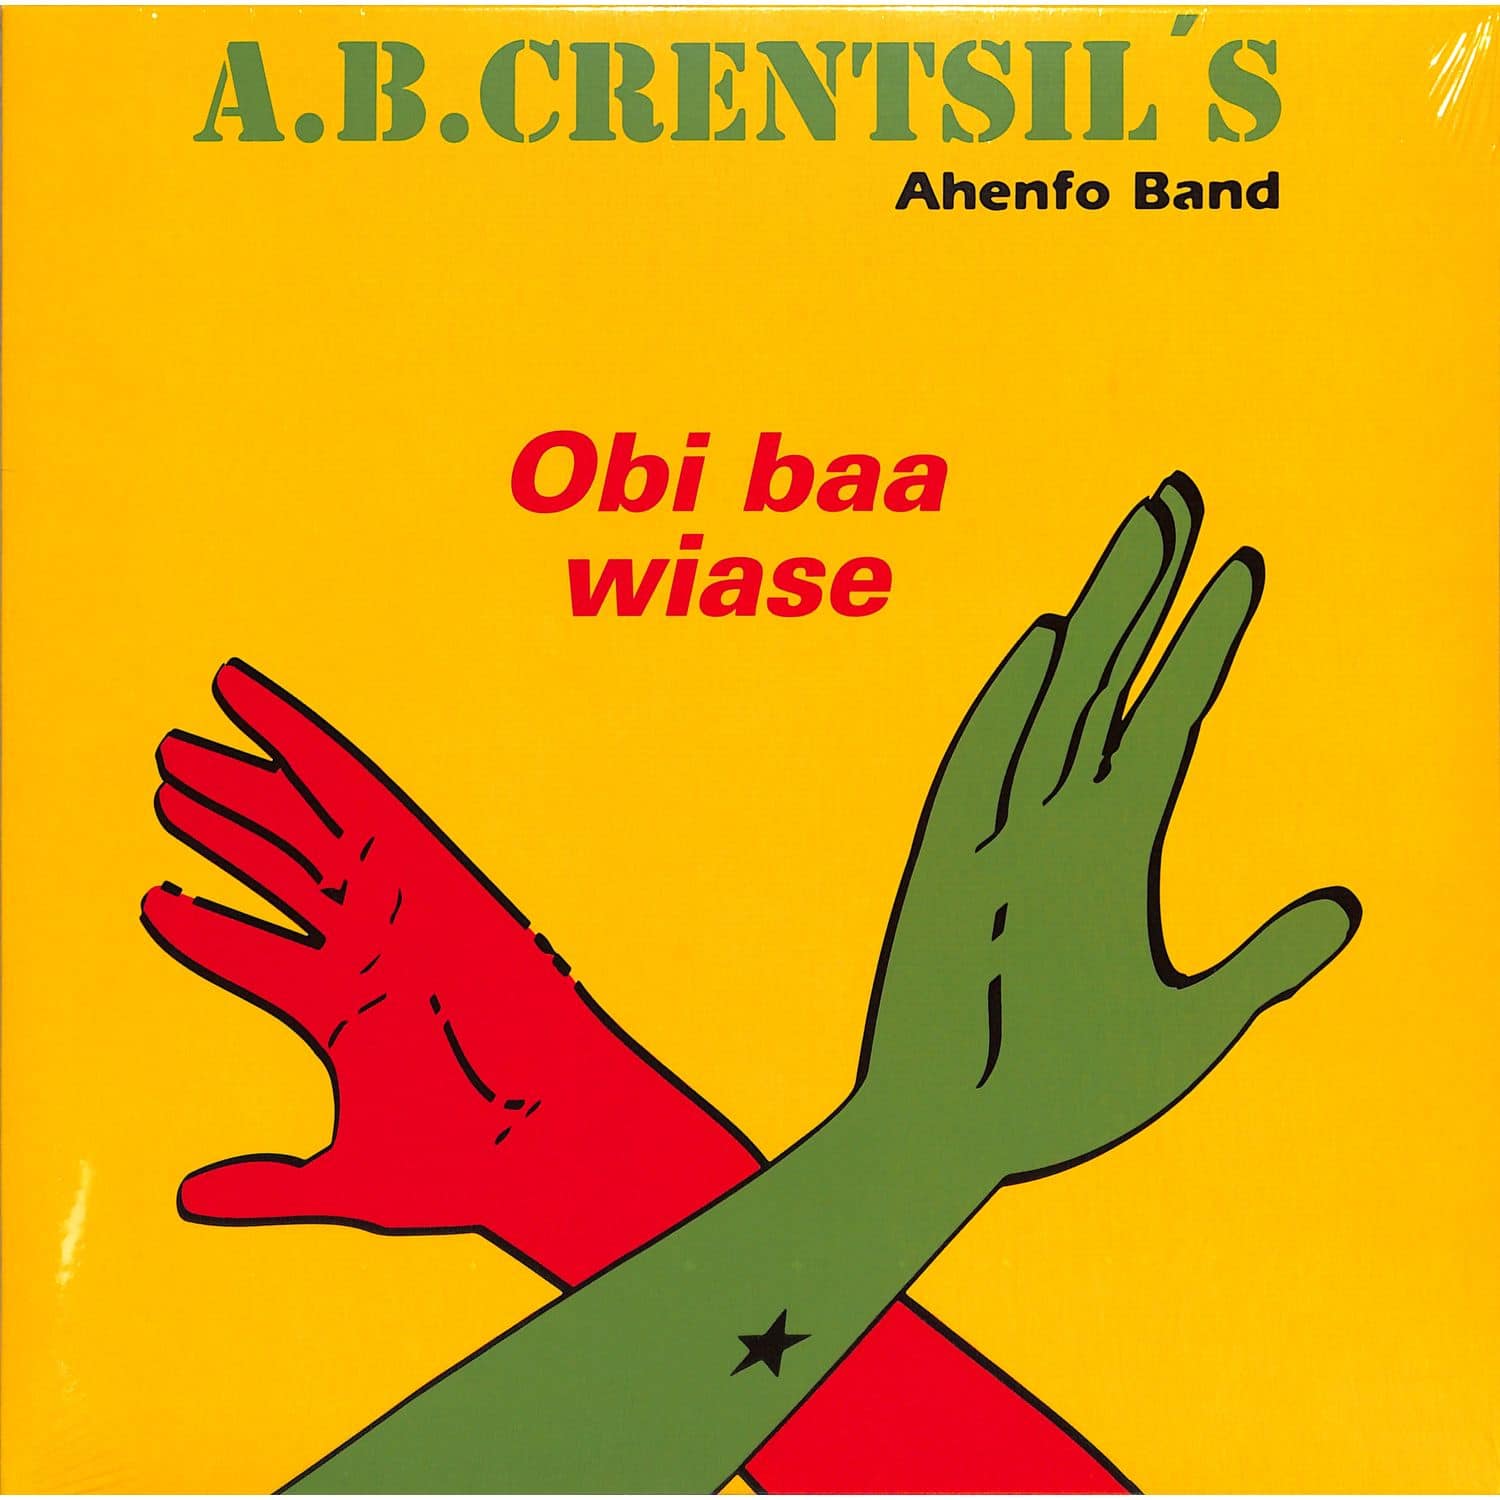 A.B. Crentsils Ahenfo Band - OBI BAA WIASE 